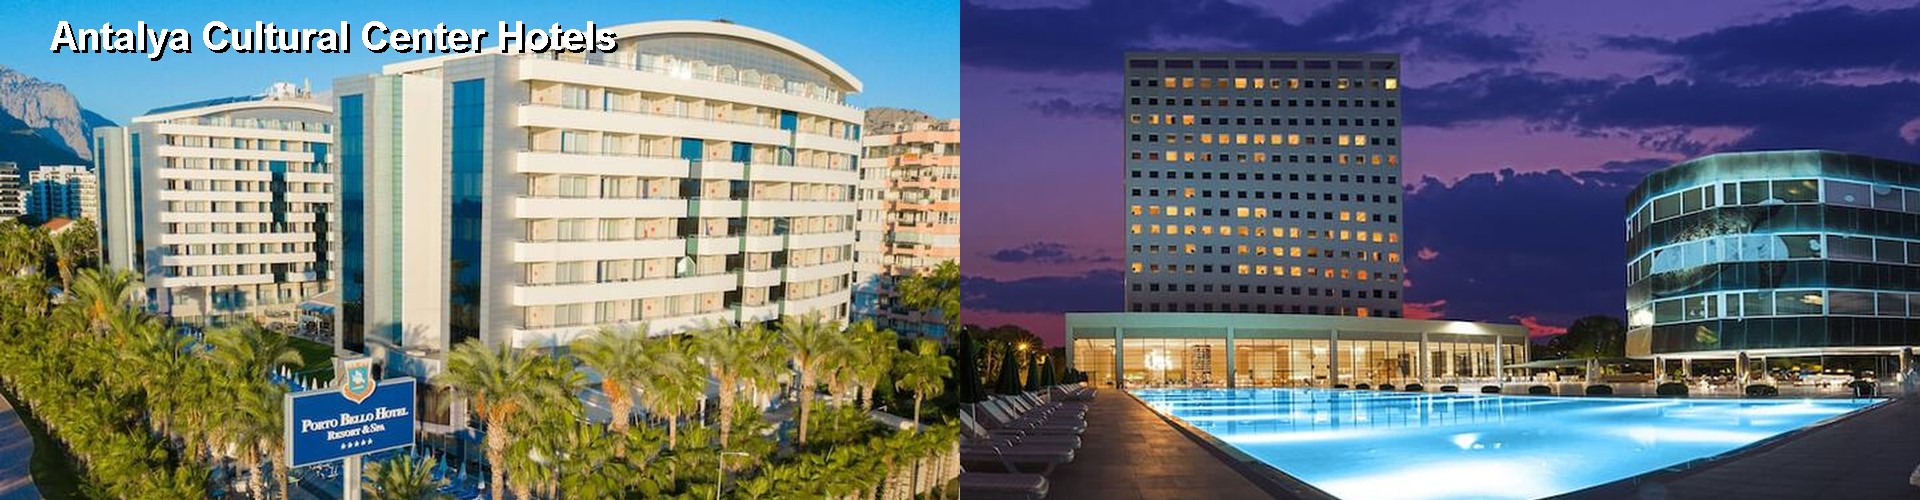 5 Best Hotels near Antalya Cultural Center